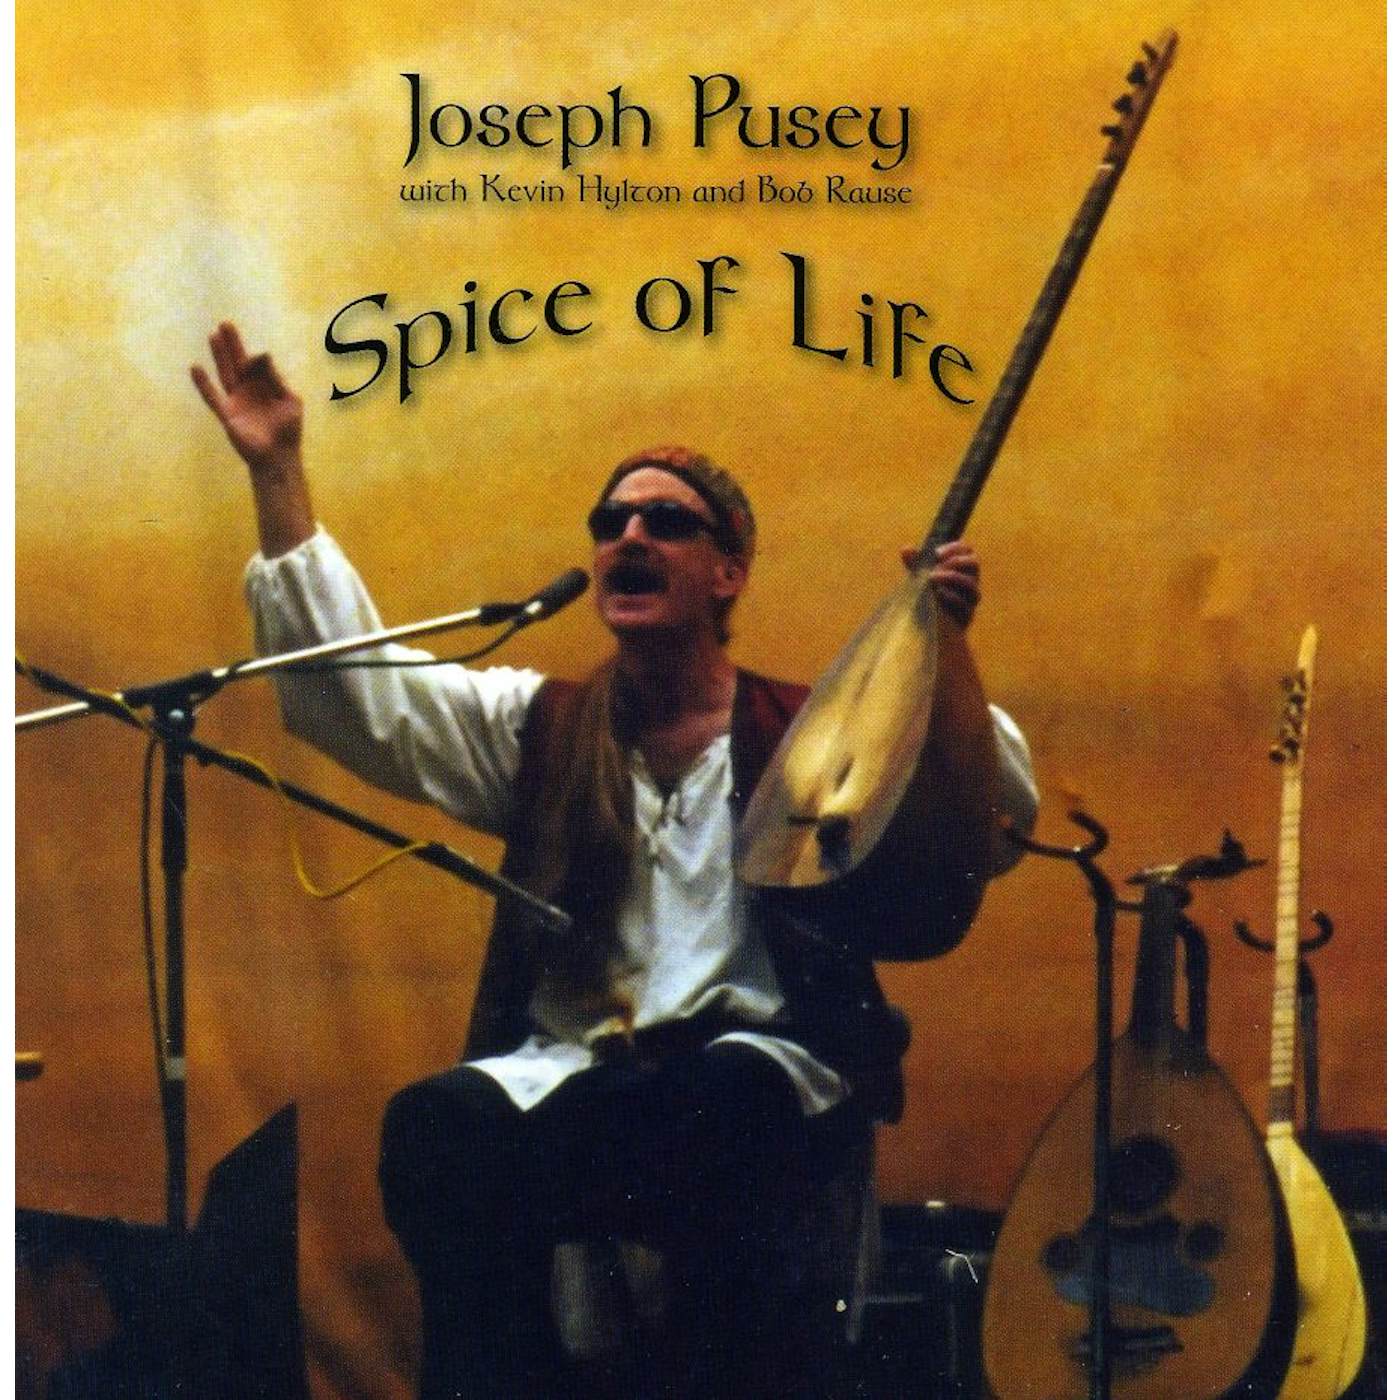 Joseph Pusey SPICE OF LIFE CD